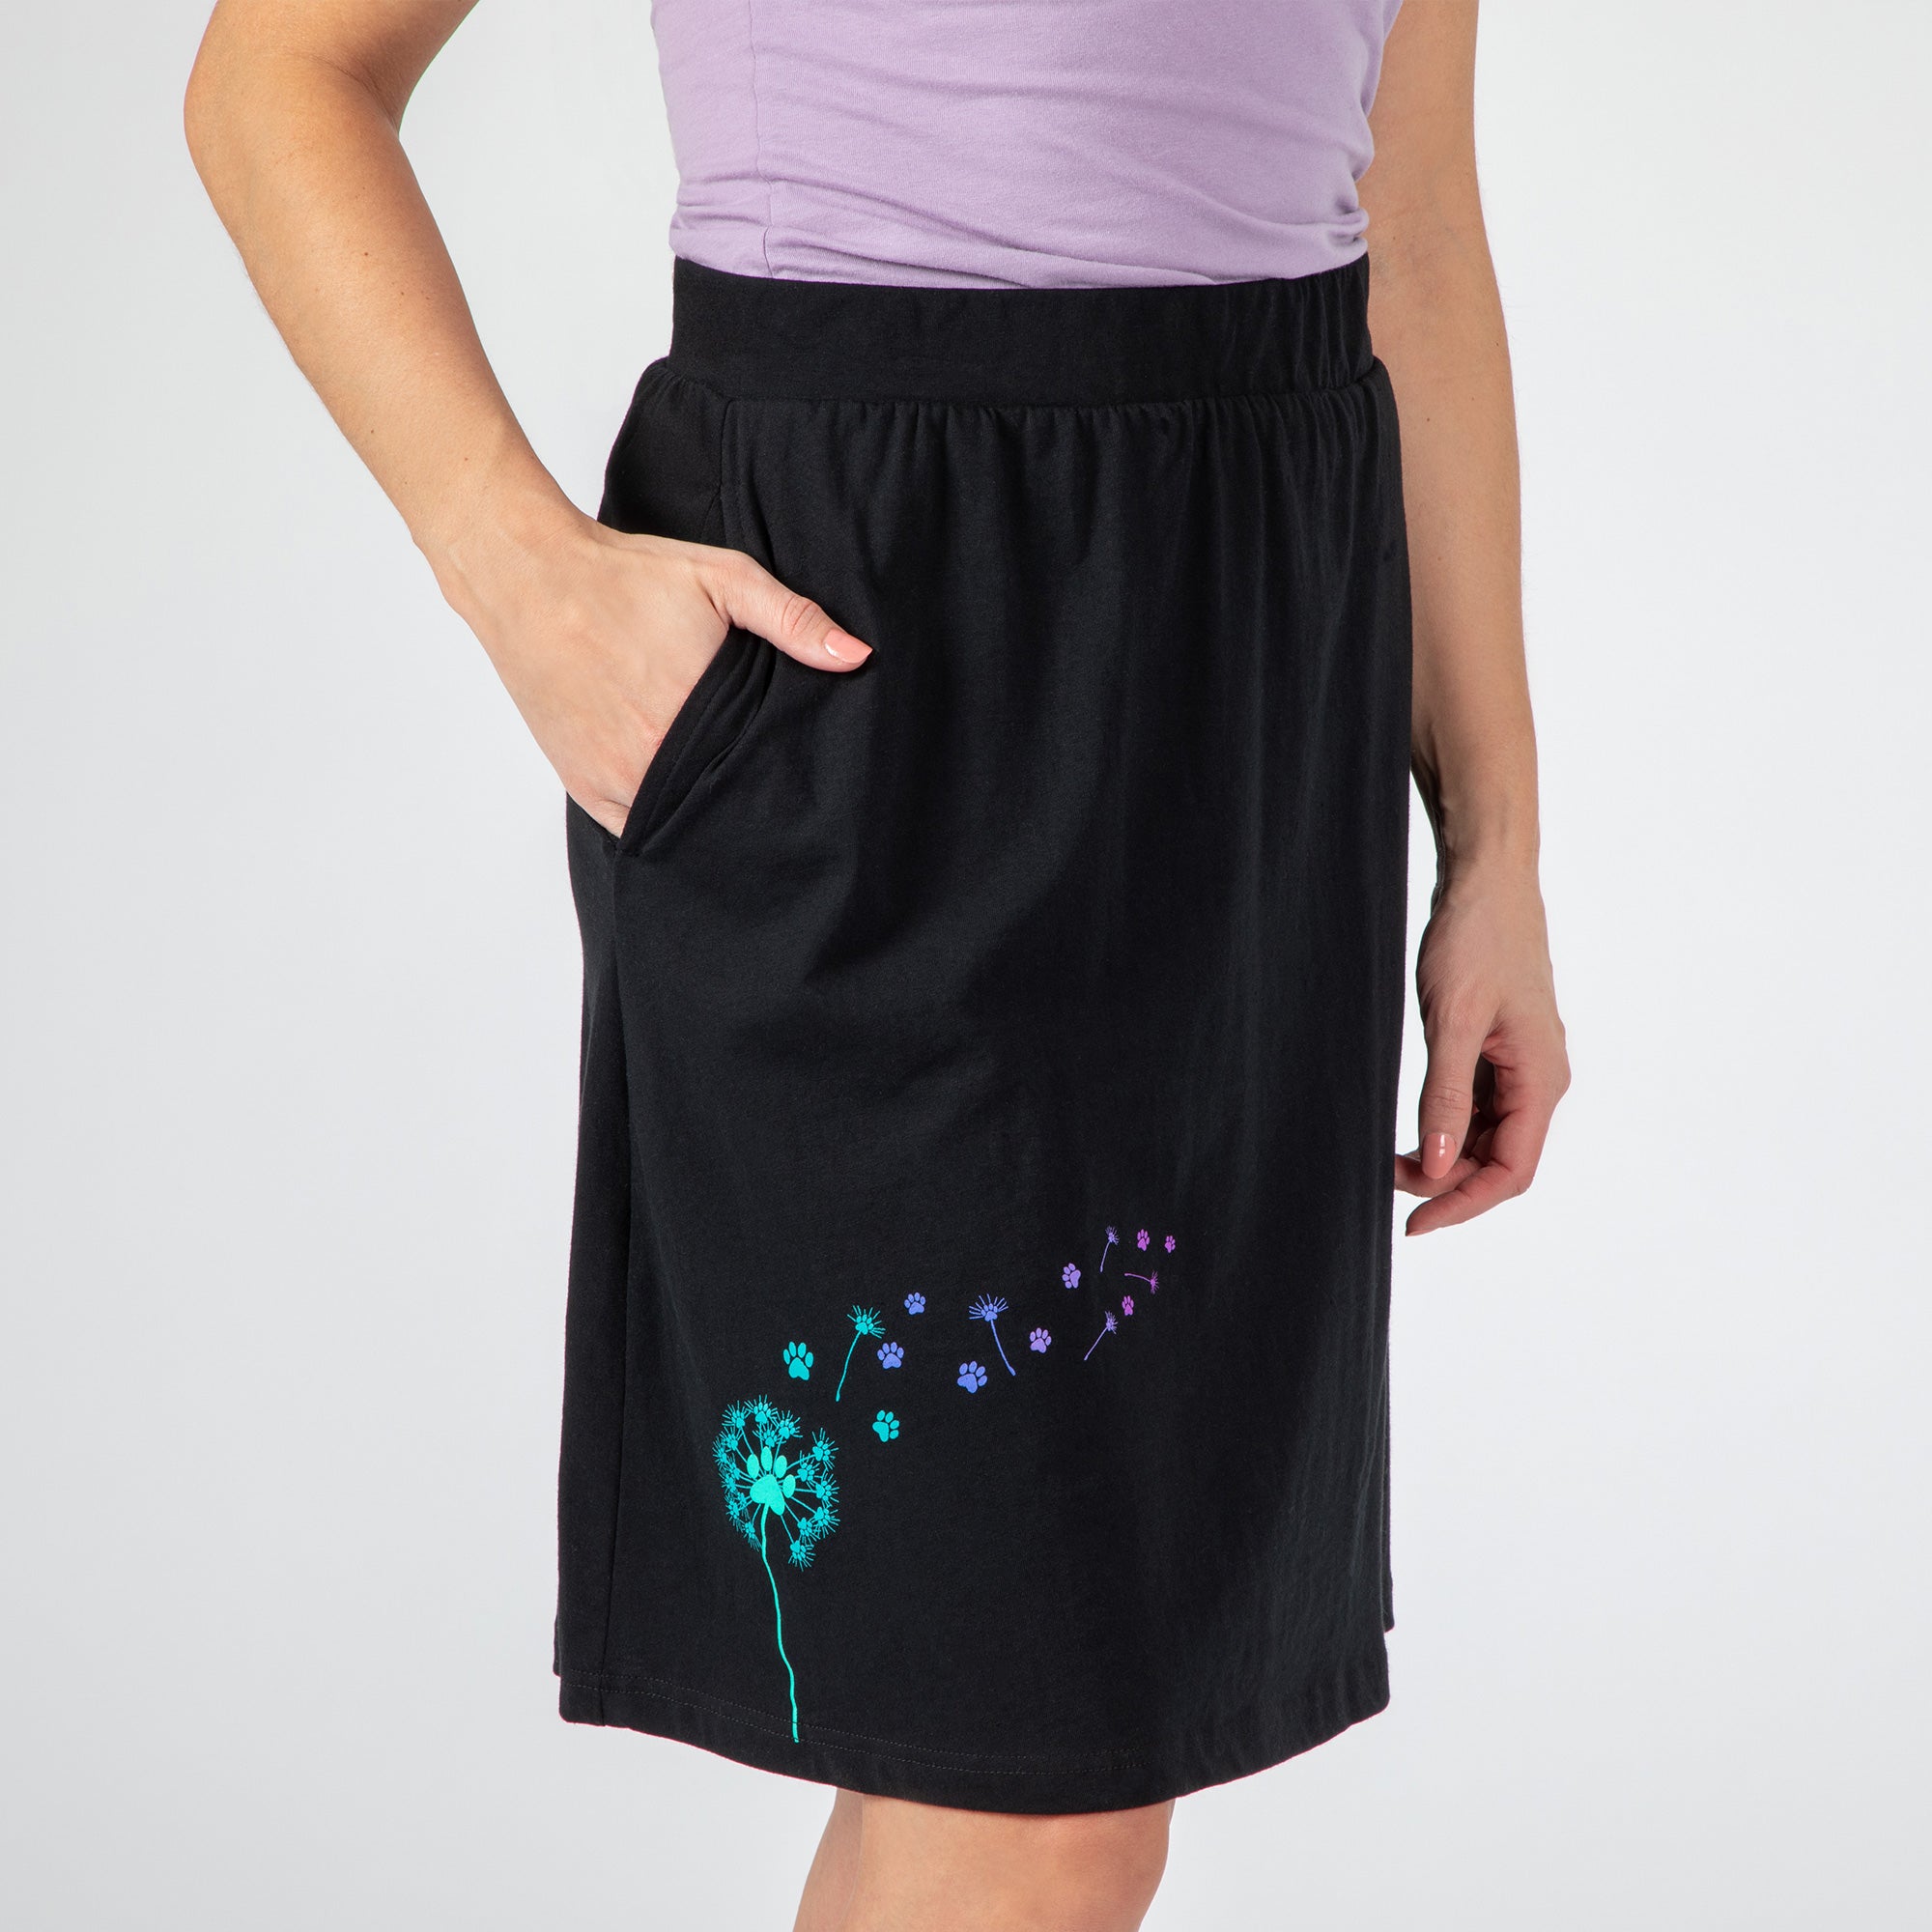 Dandelion Paw Print A-Line Skirt - 3X